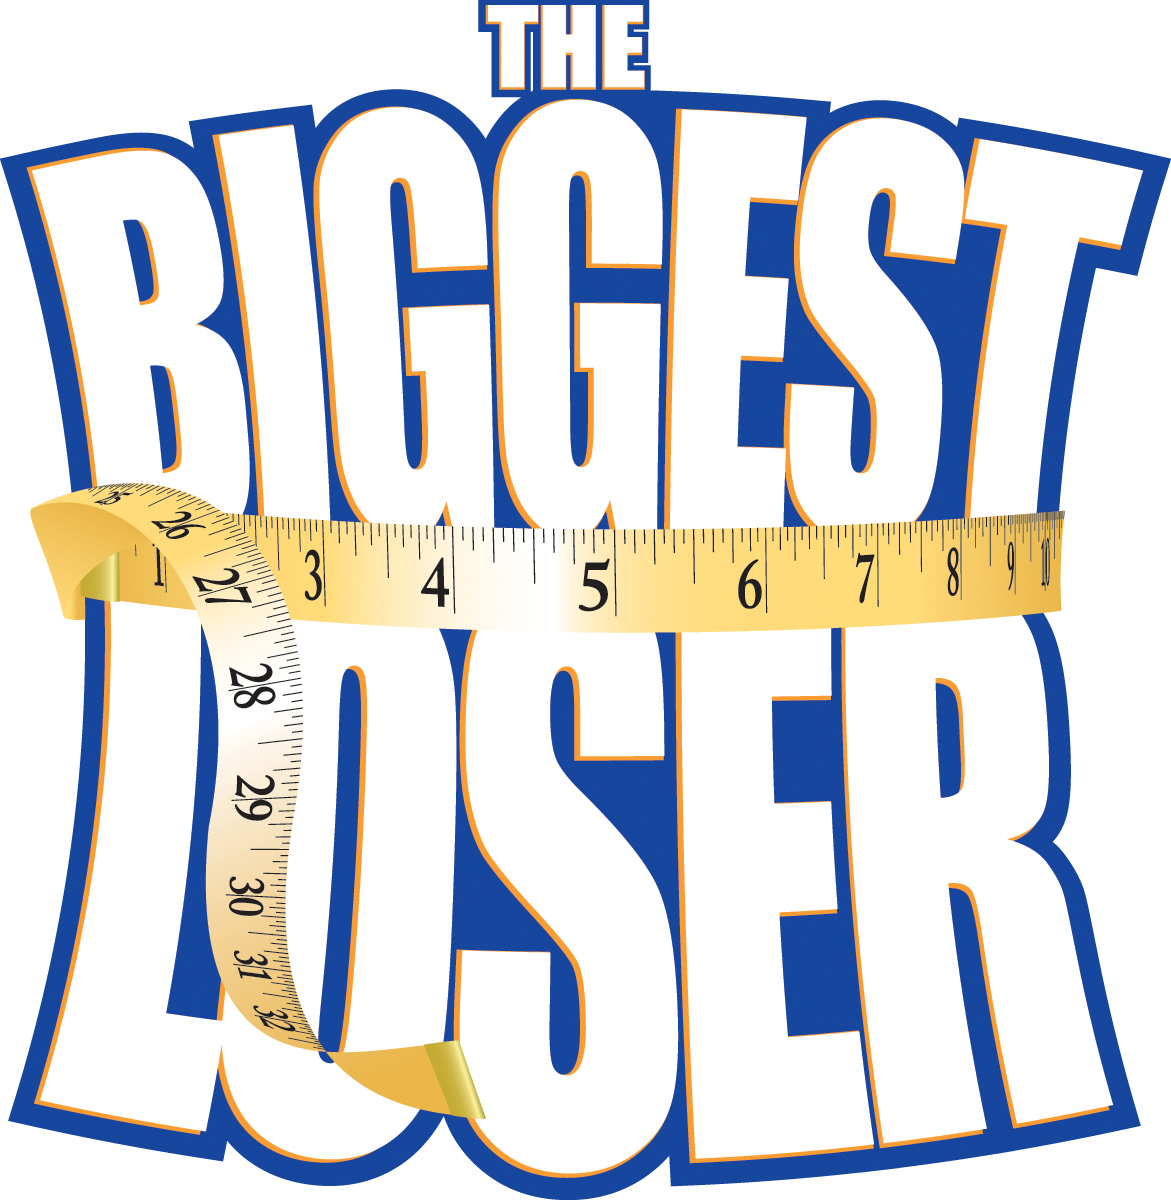 TV director Ian Stevenson directs 'The Biggest Loser'. More at www.ianstevenson.tv